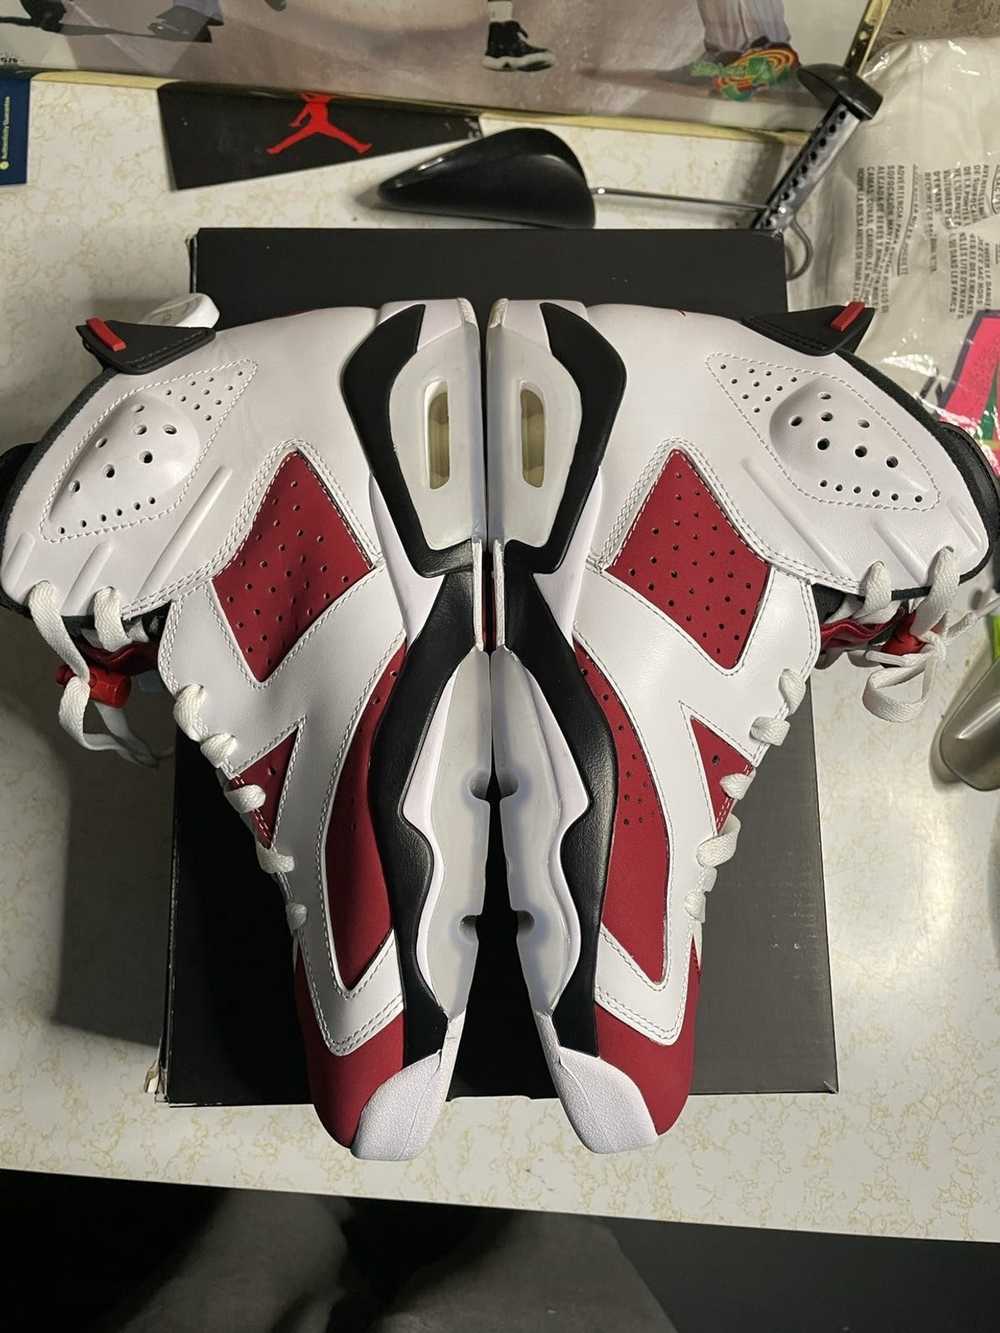 Jordan Brand Jordan Retro 6 “Carmine” - image 3